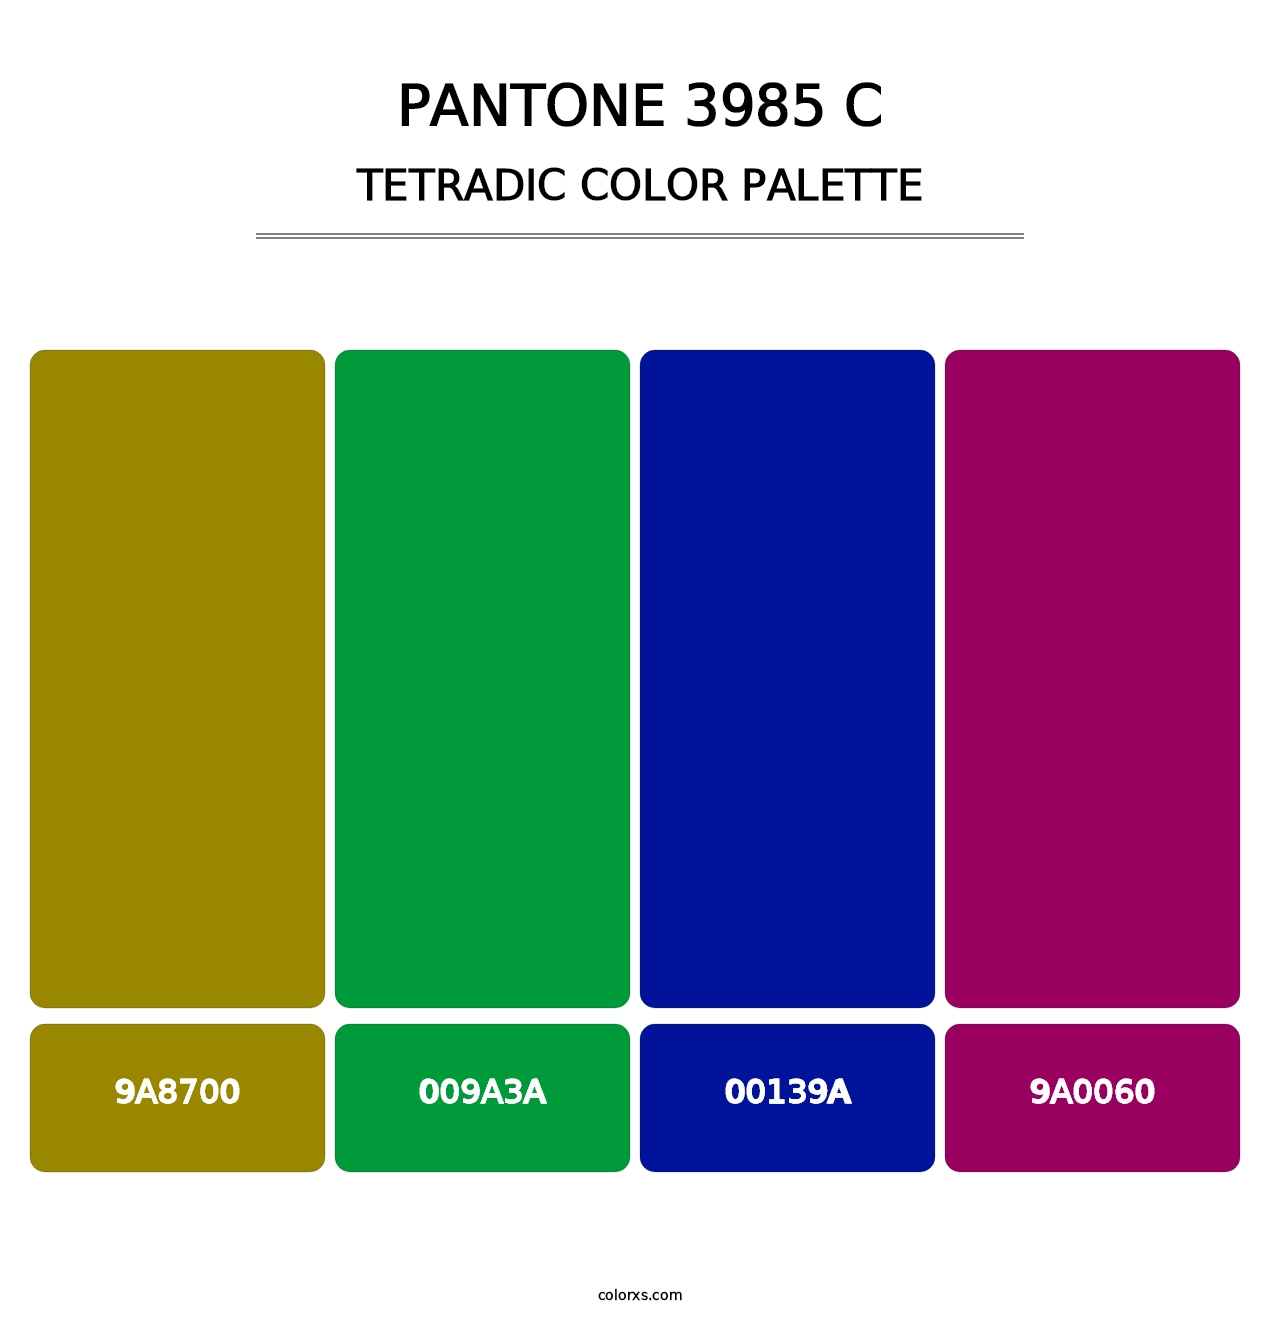 PANTONE 3985 C - Tetradic Color Palette